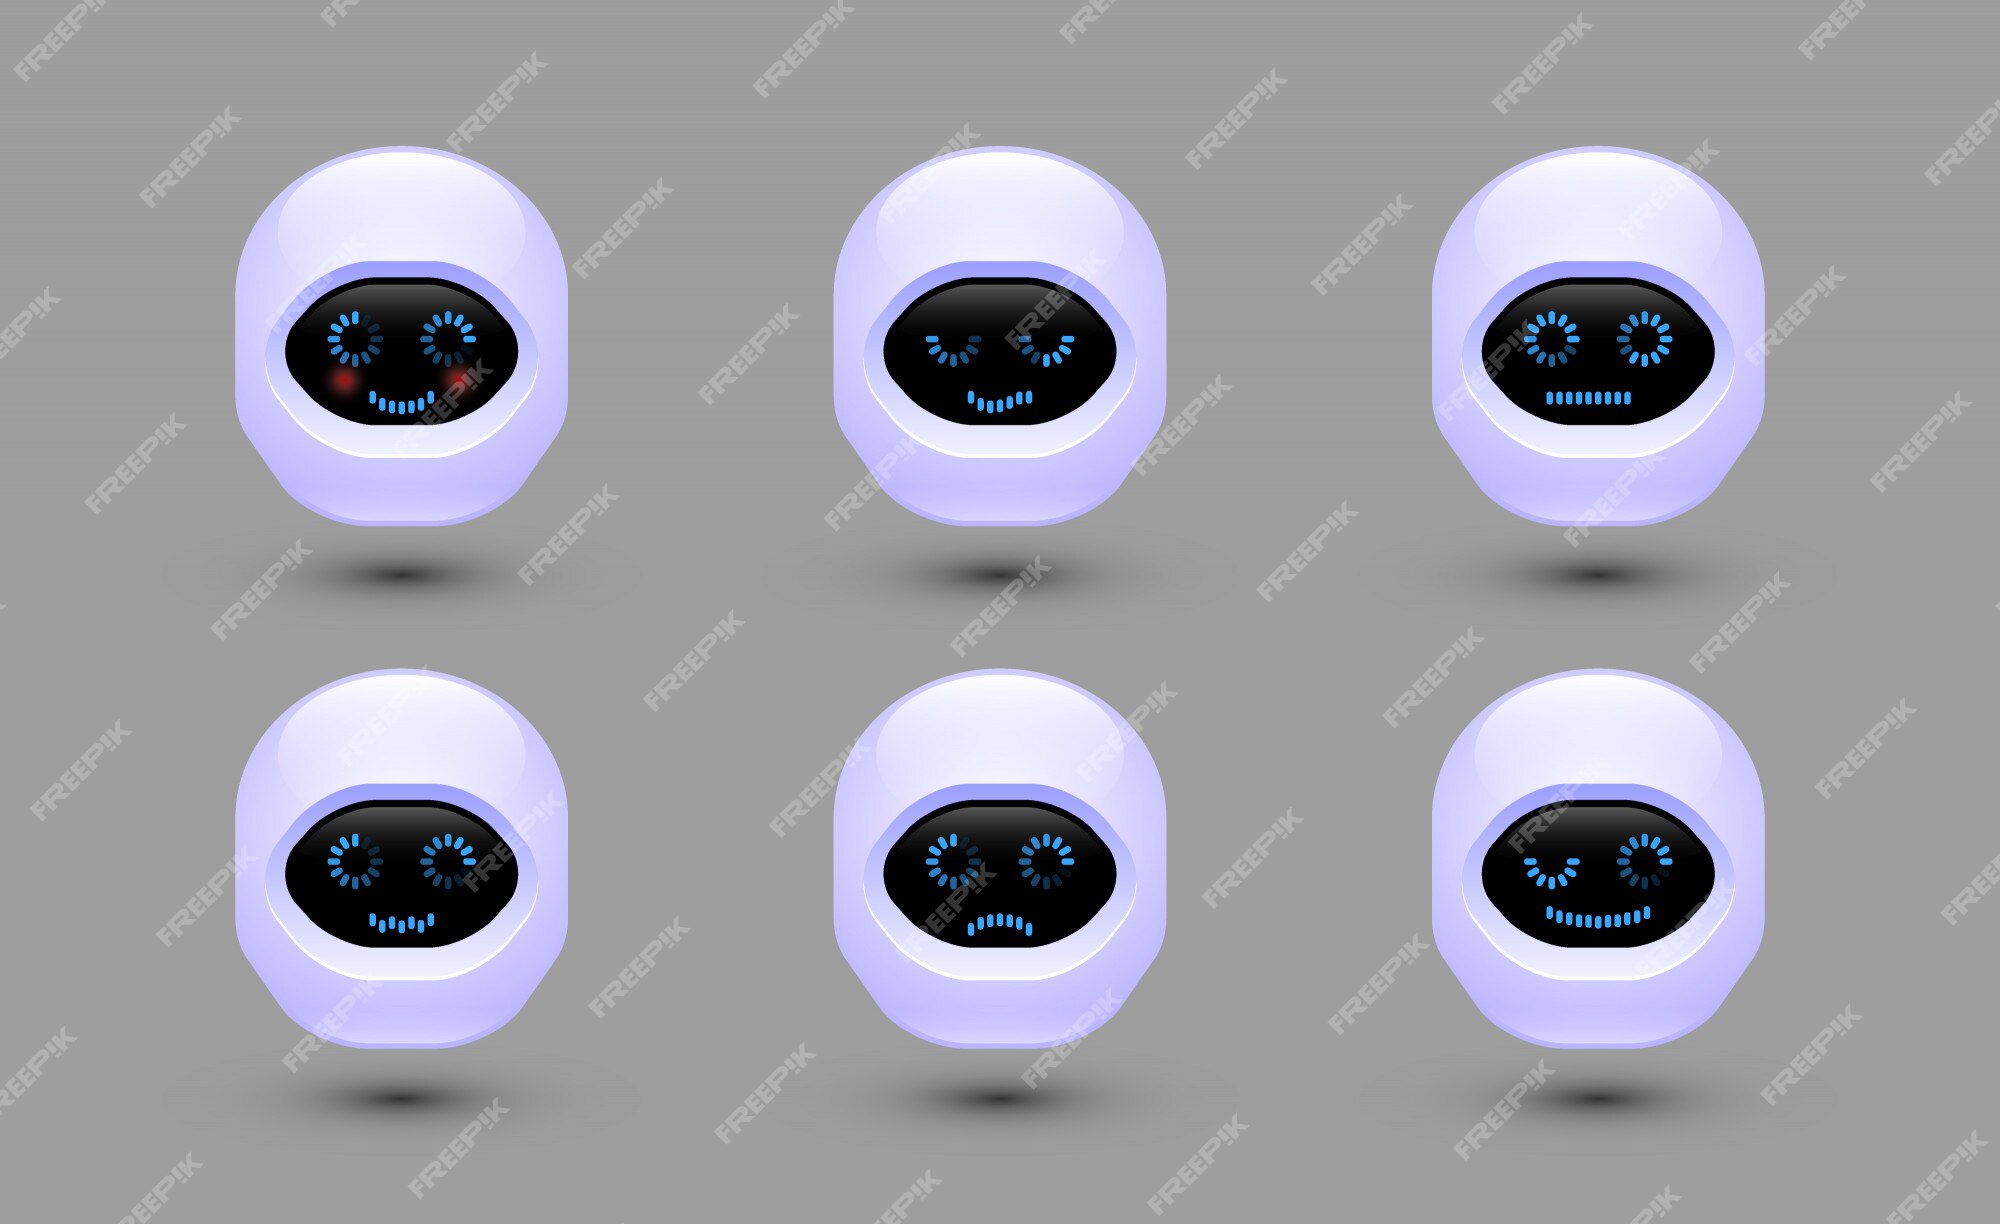 Robot eyes Vectors & Illustrations for Free Download | Freepik